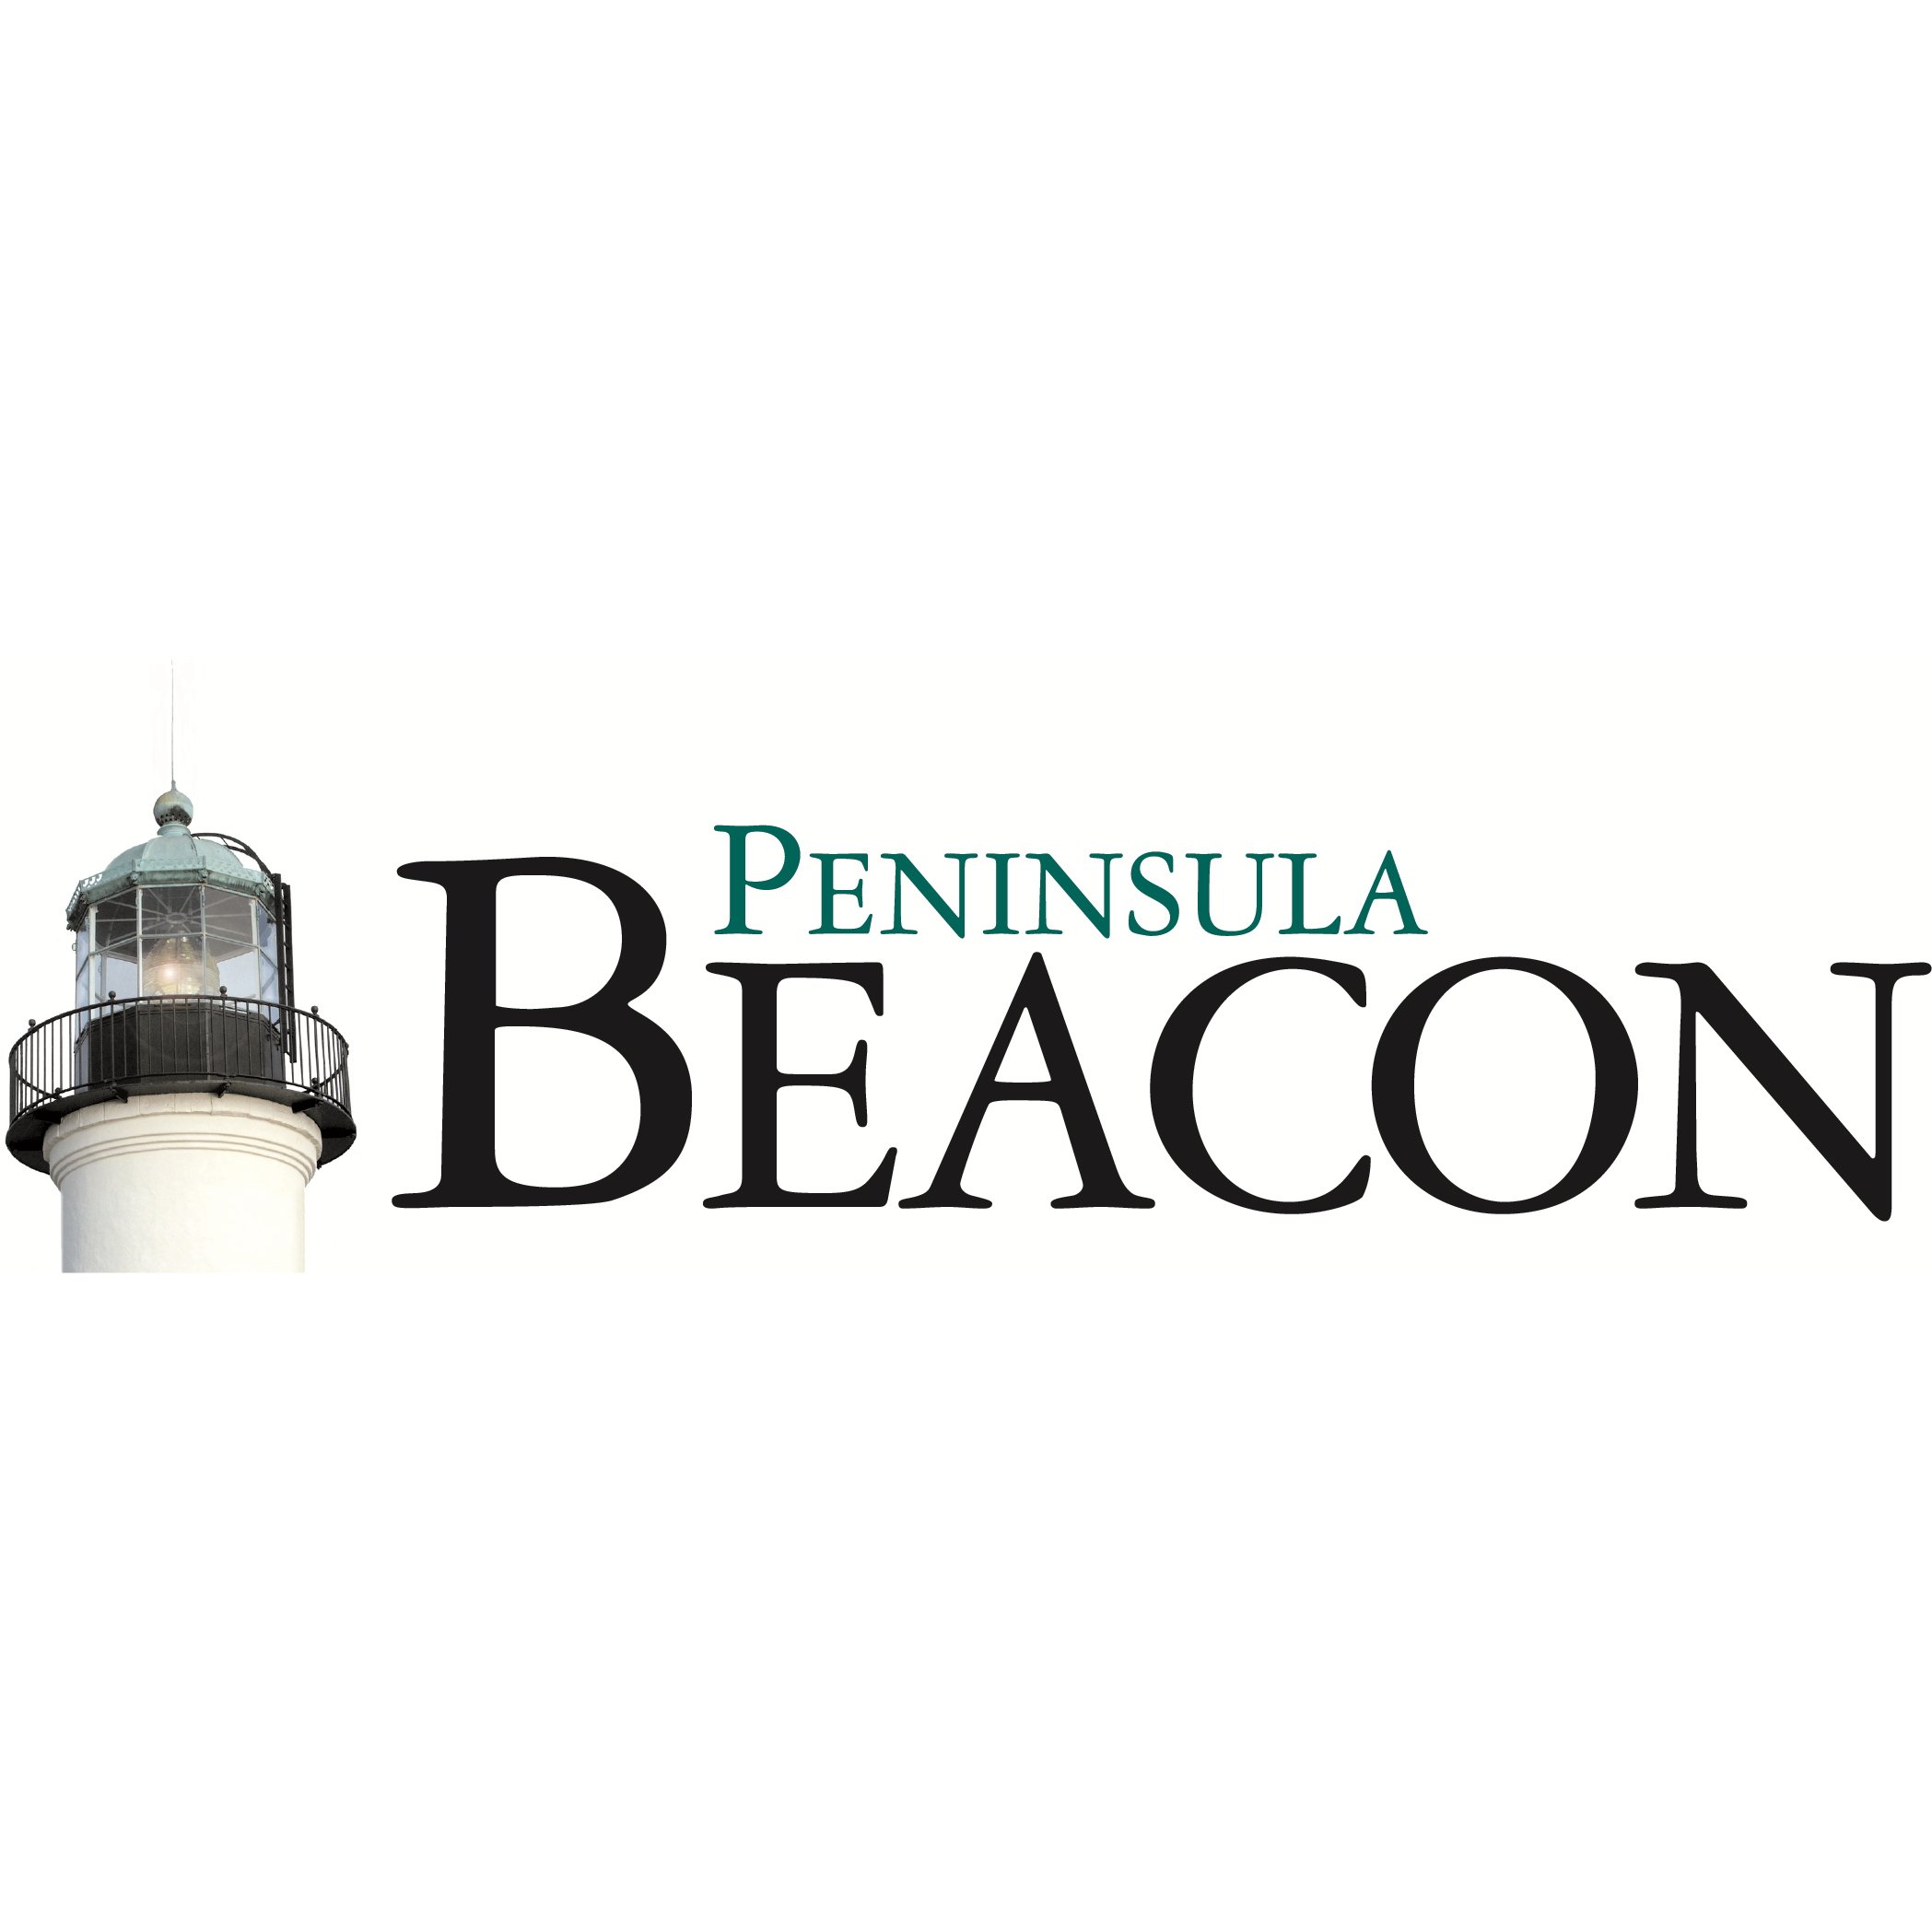 Peninsula Beacon